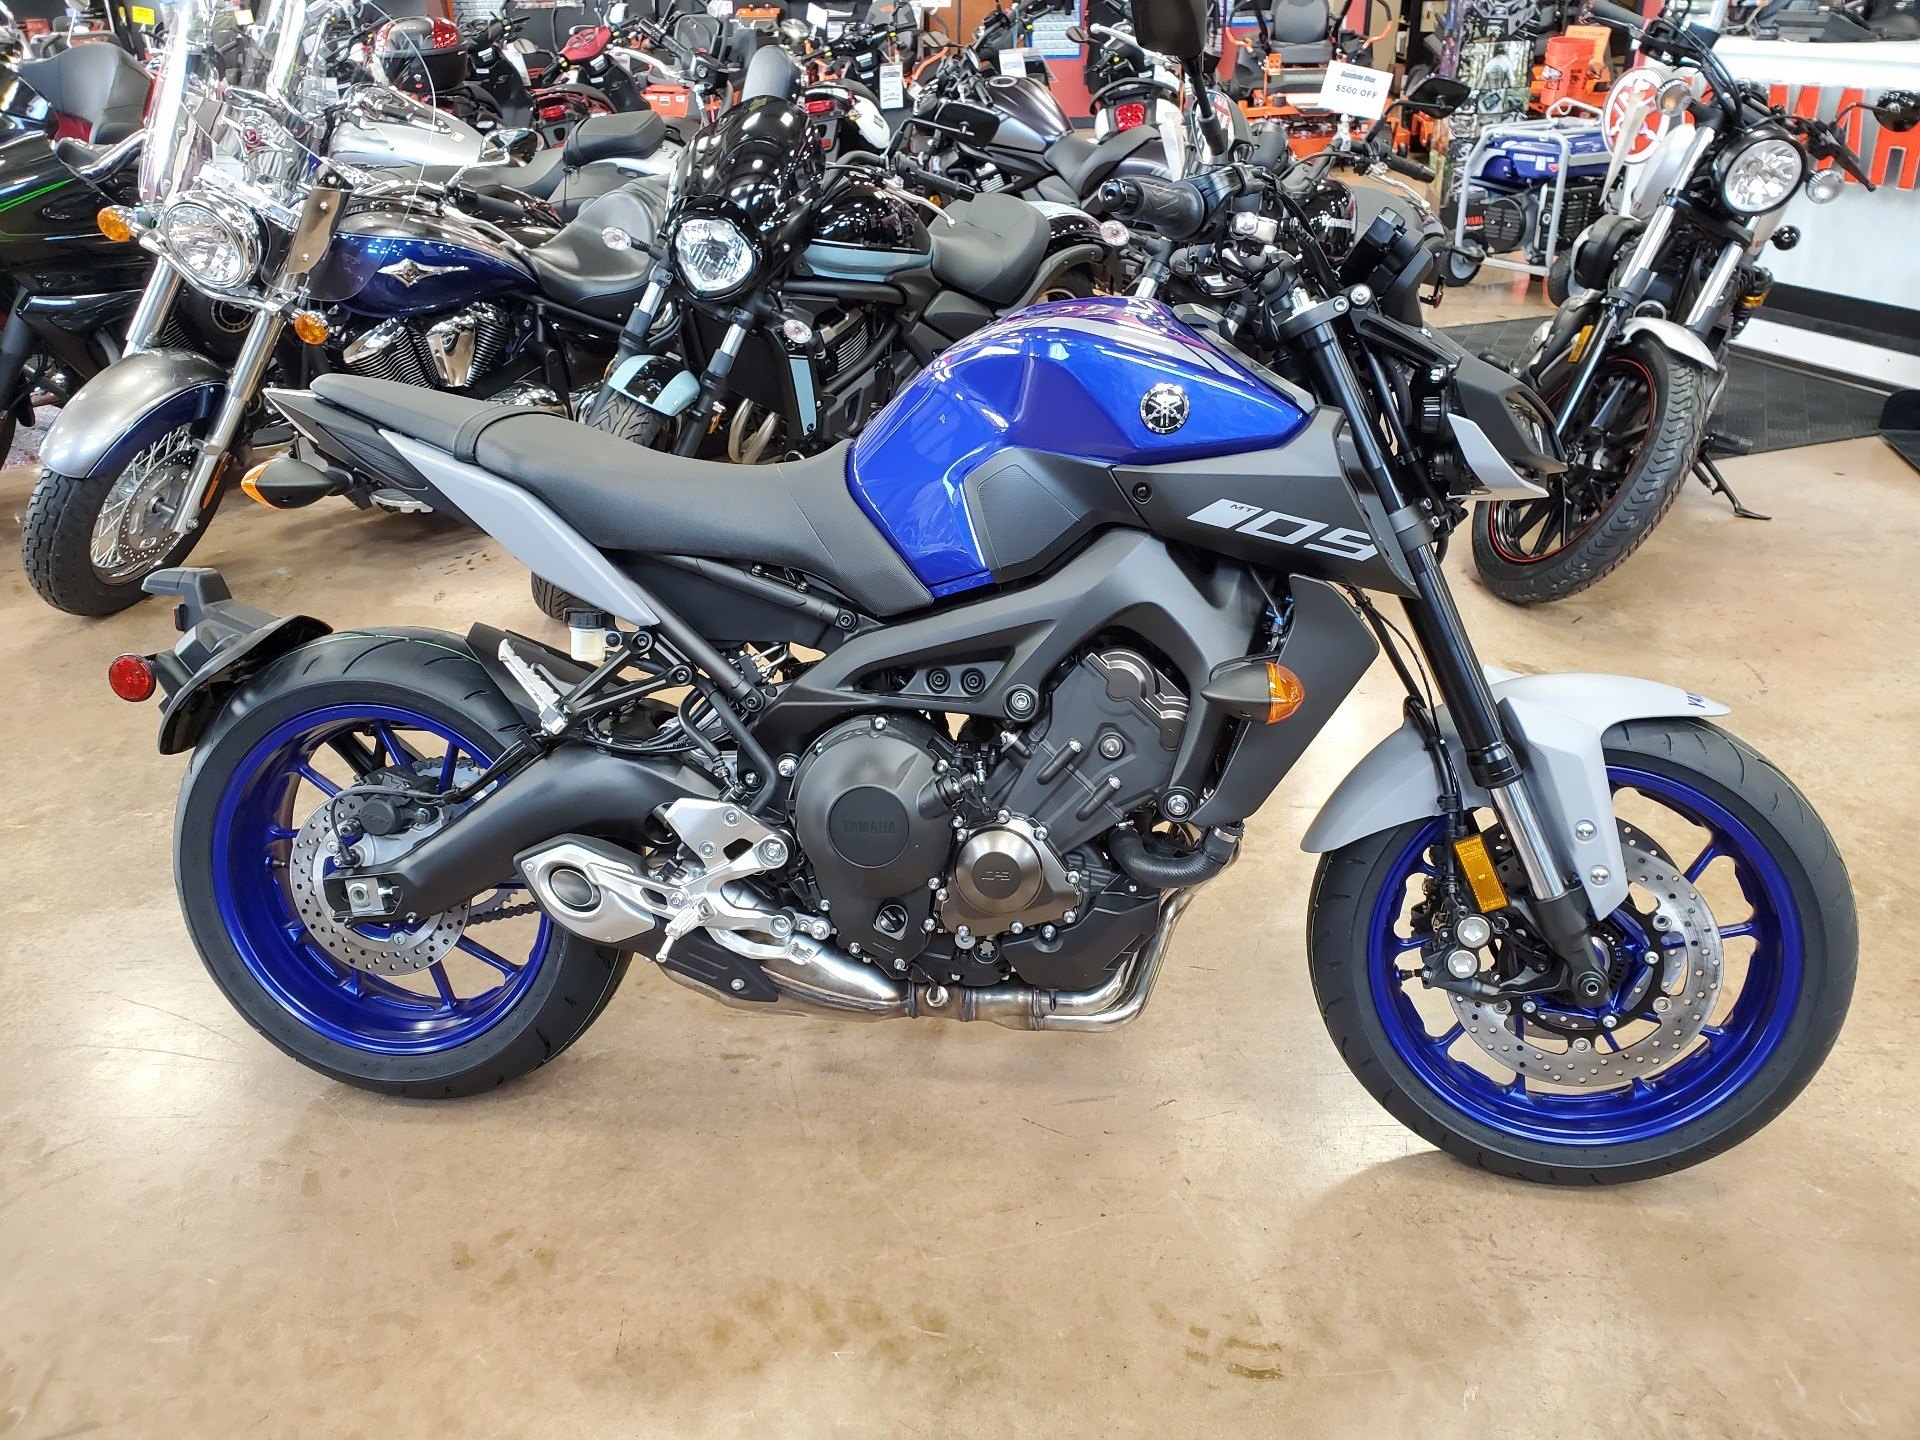 2020 Yamaha MT-09 Motorcycles - Nadon Sport